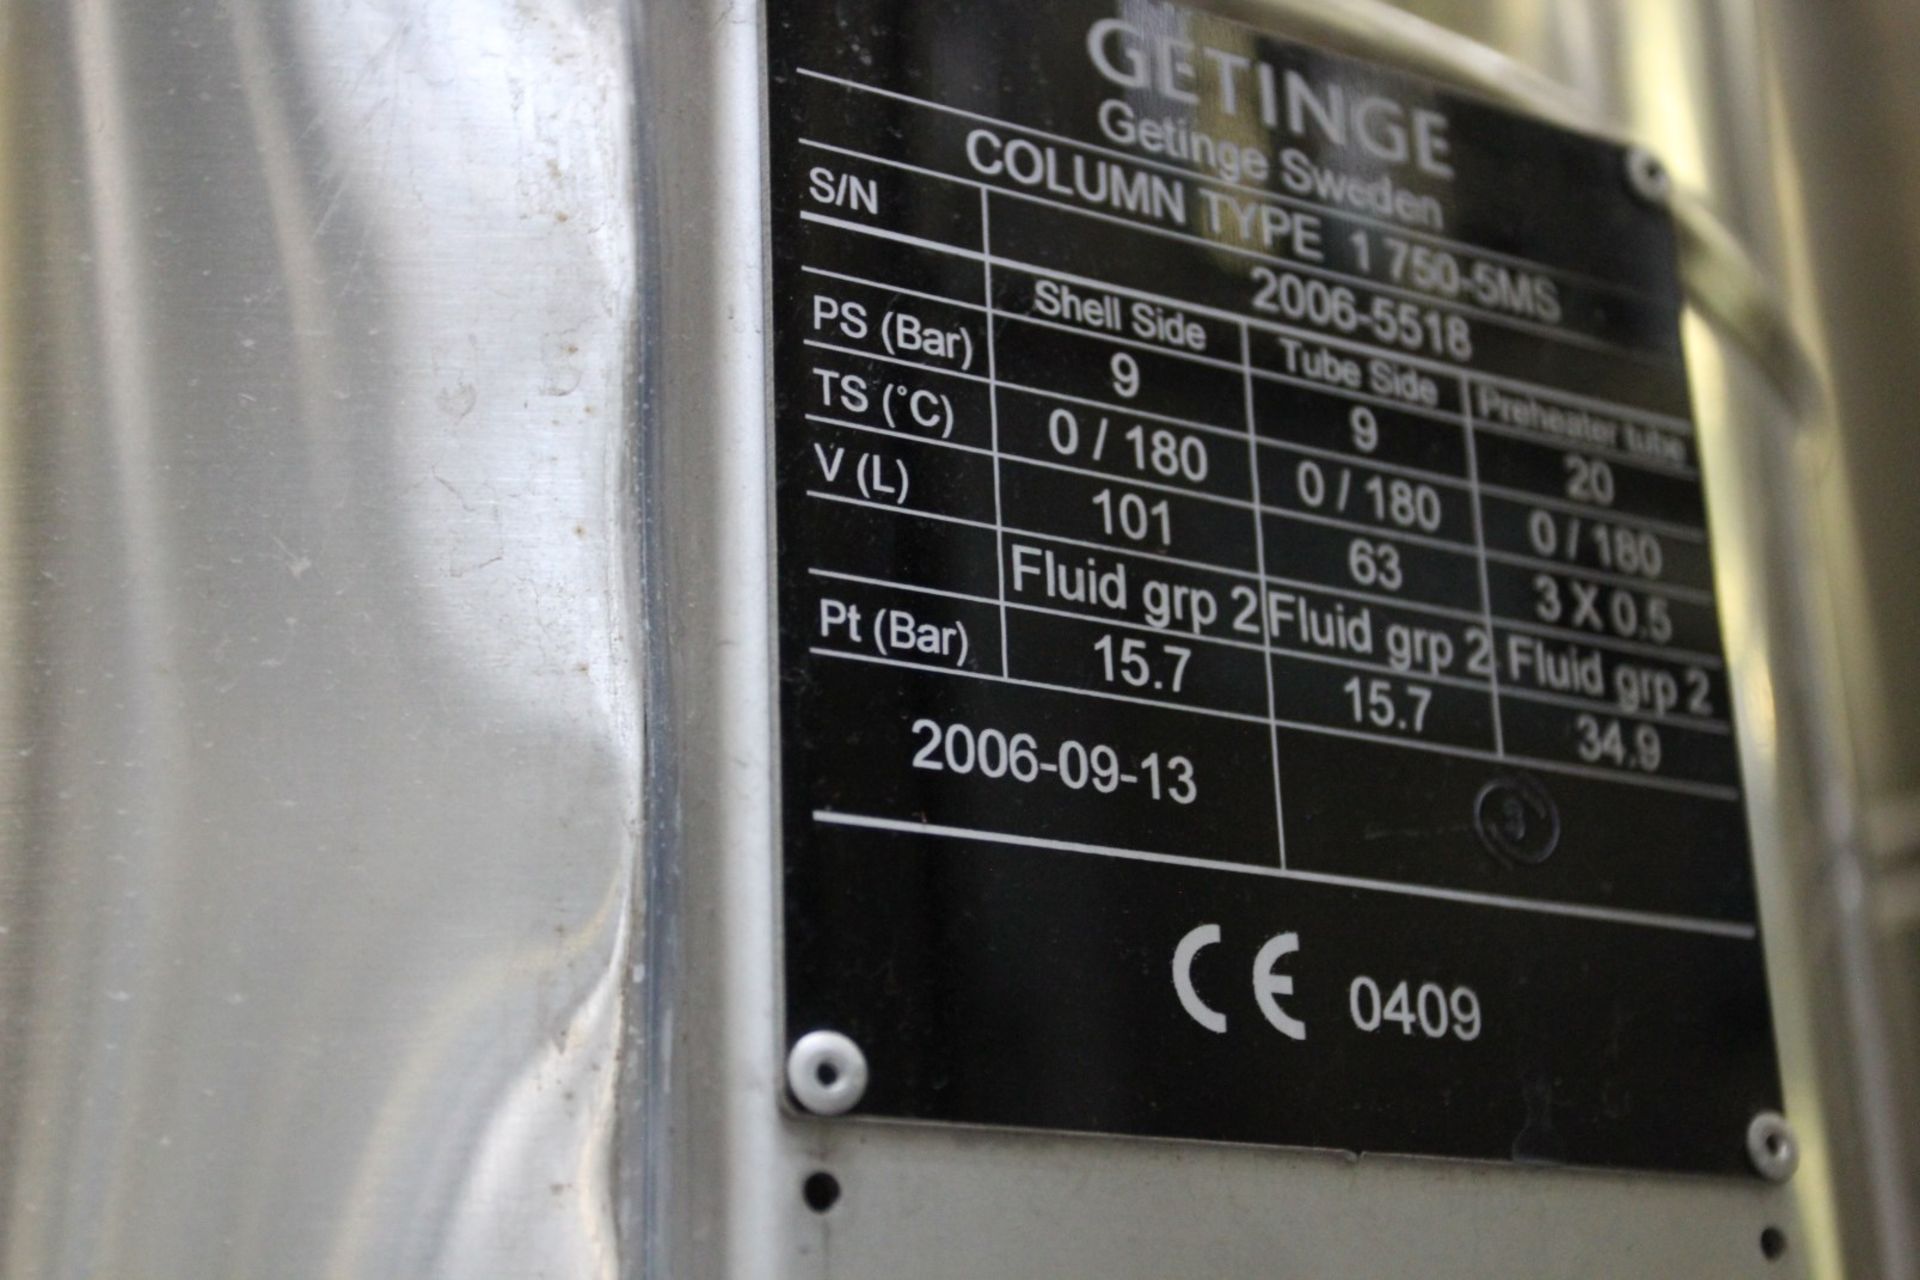 Gettinge MS750-5 Water Distillator, s/n 272.06, Allen Bradley Panelview Plus 1000 PLC Control, (5) - Image 9 of 19